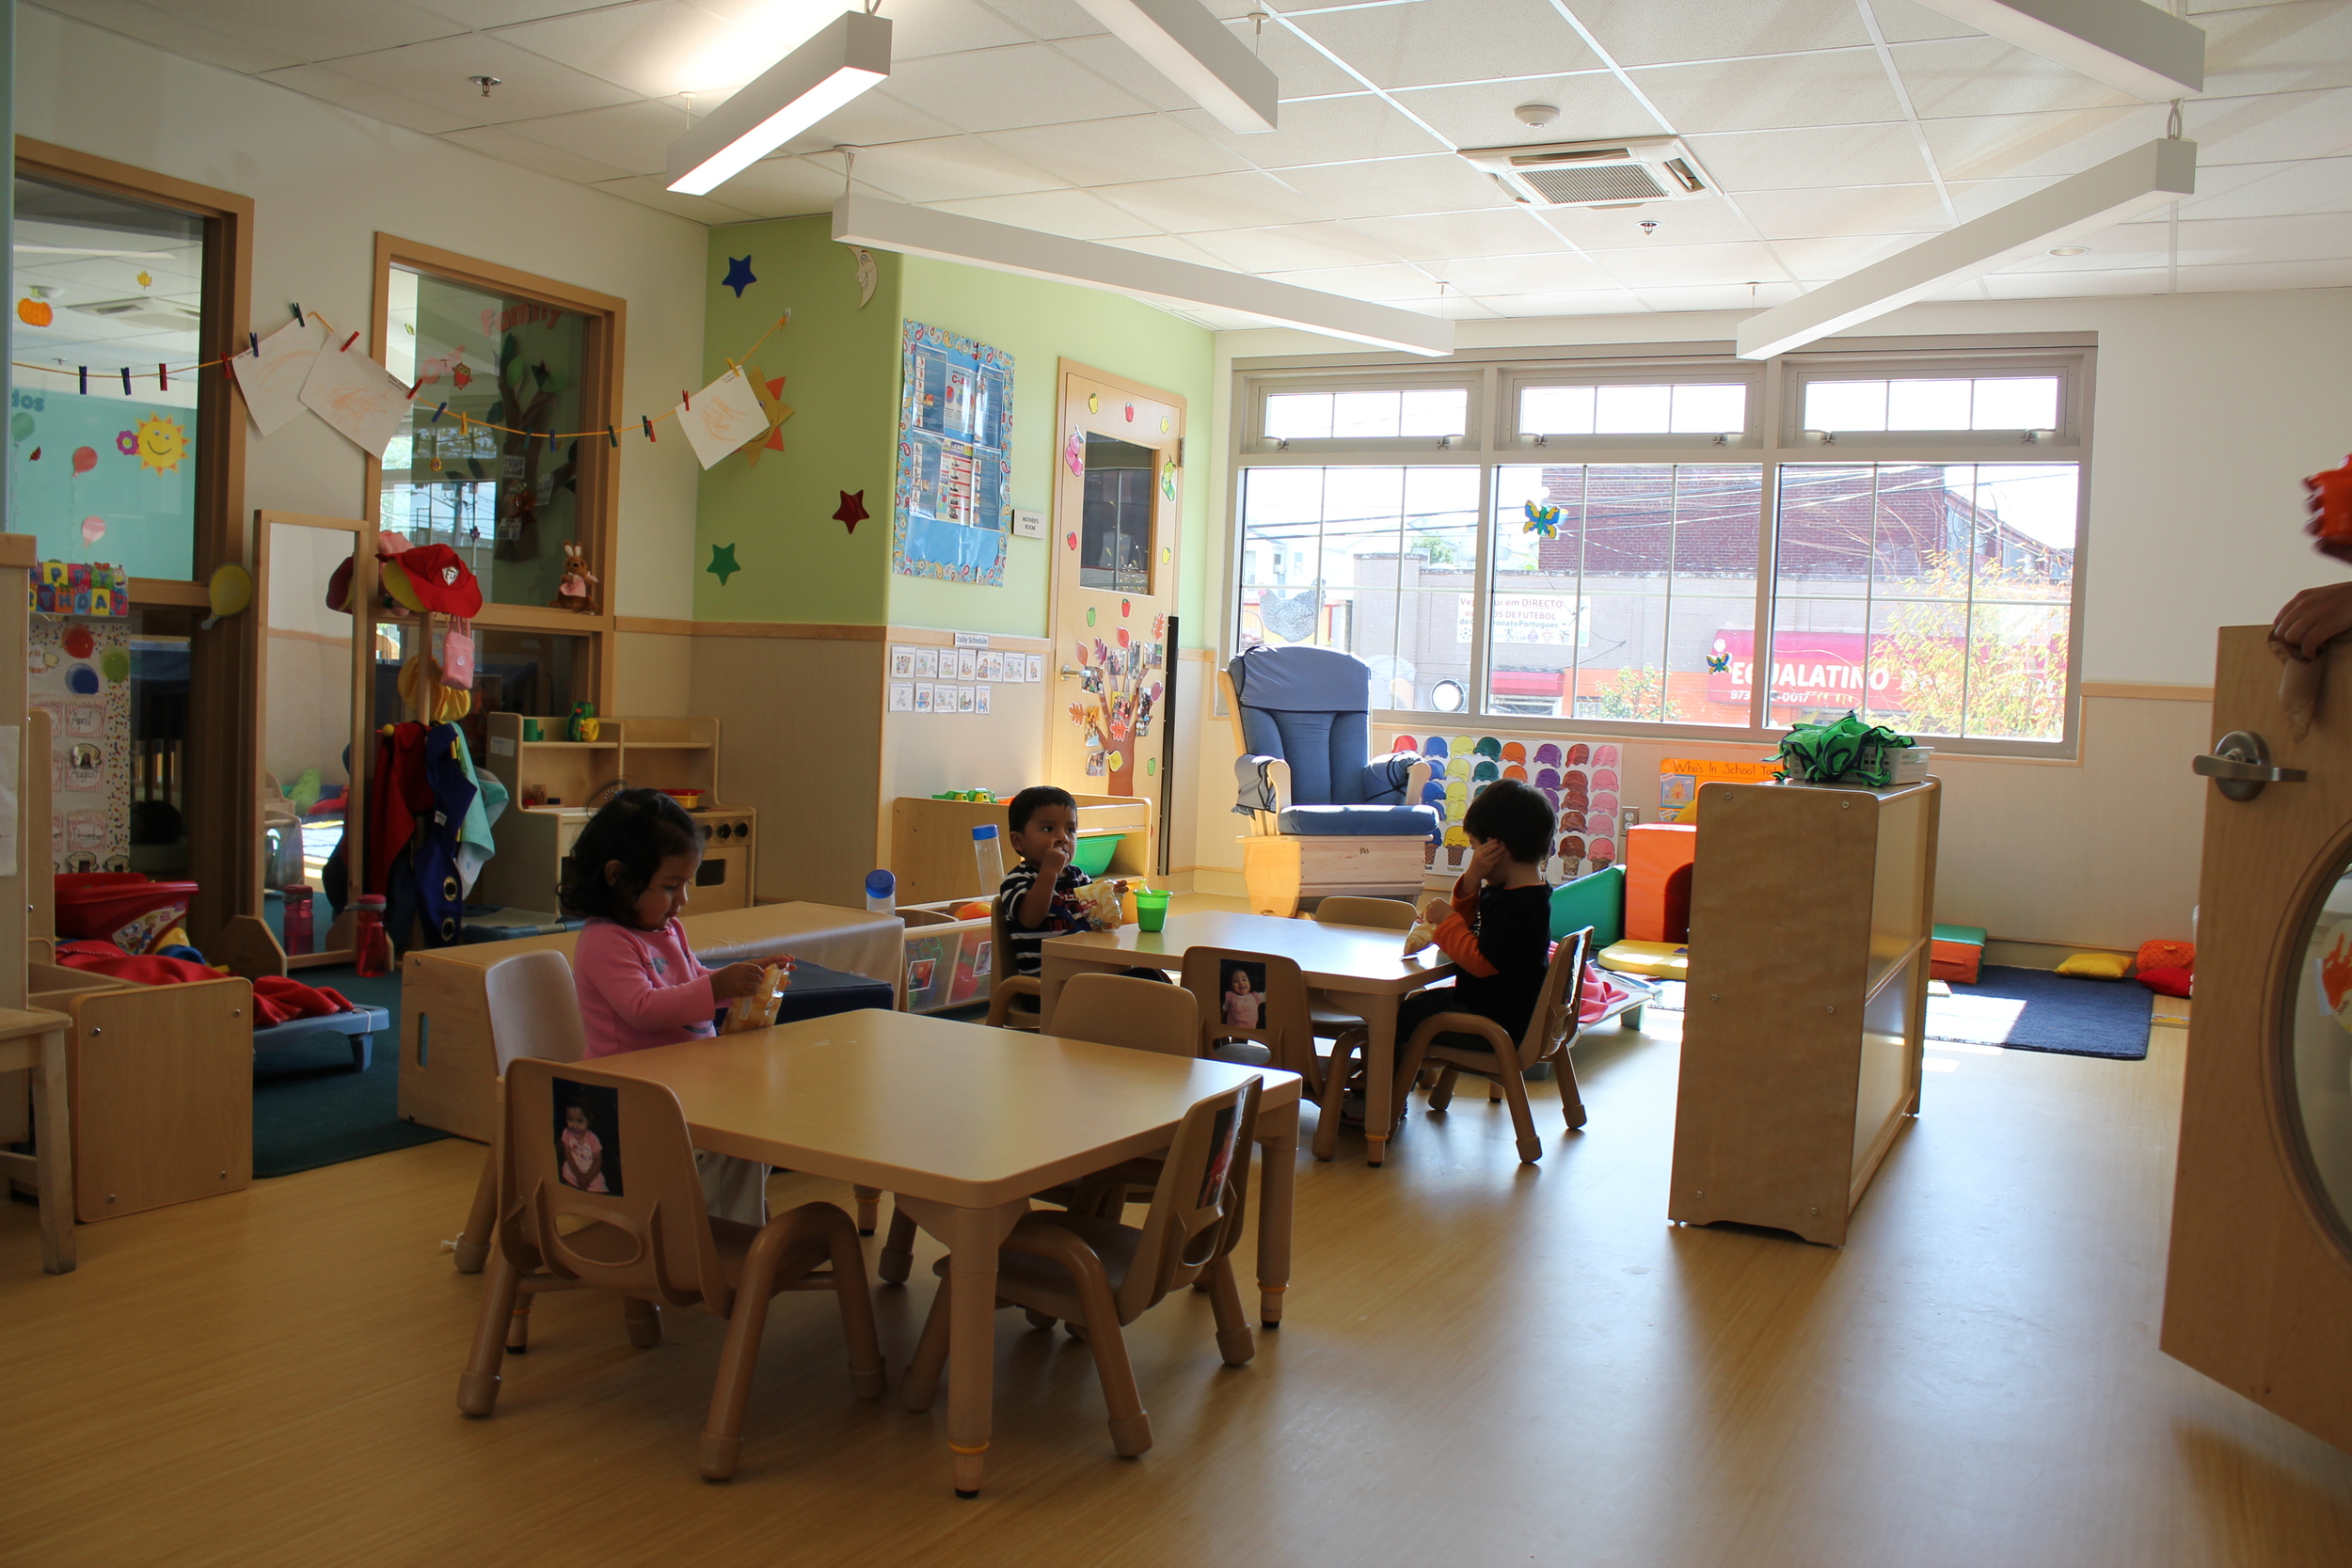 pho-int-classroom kids at table-72ppi-72x48.JPG